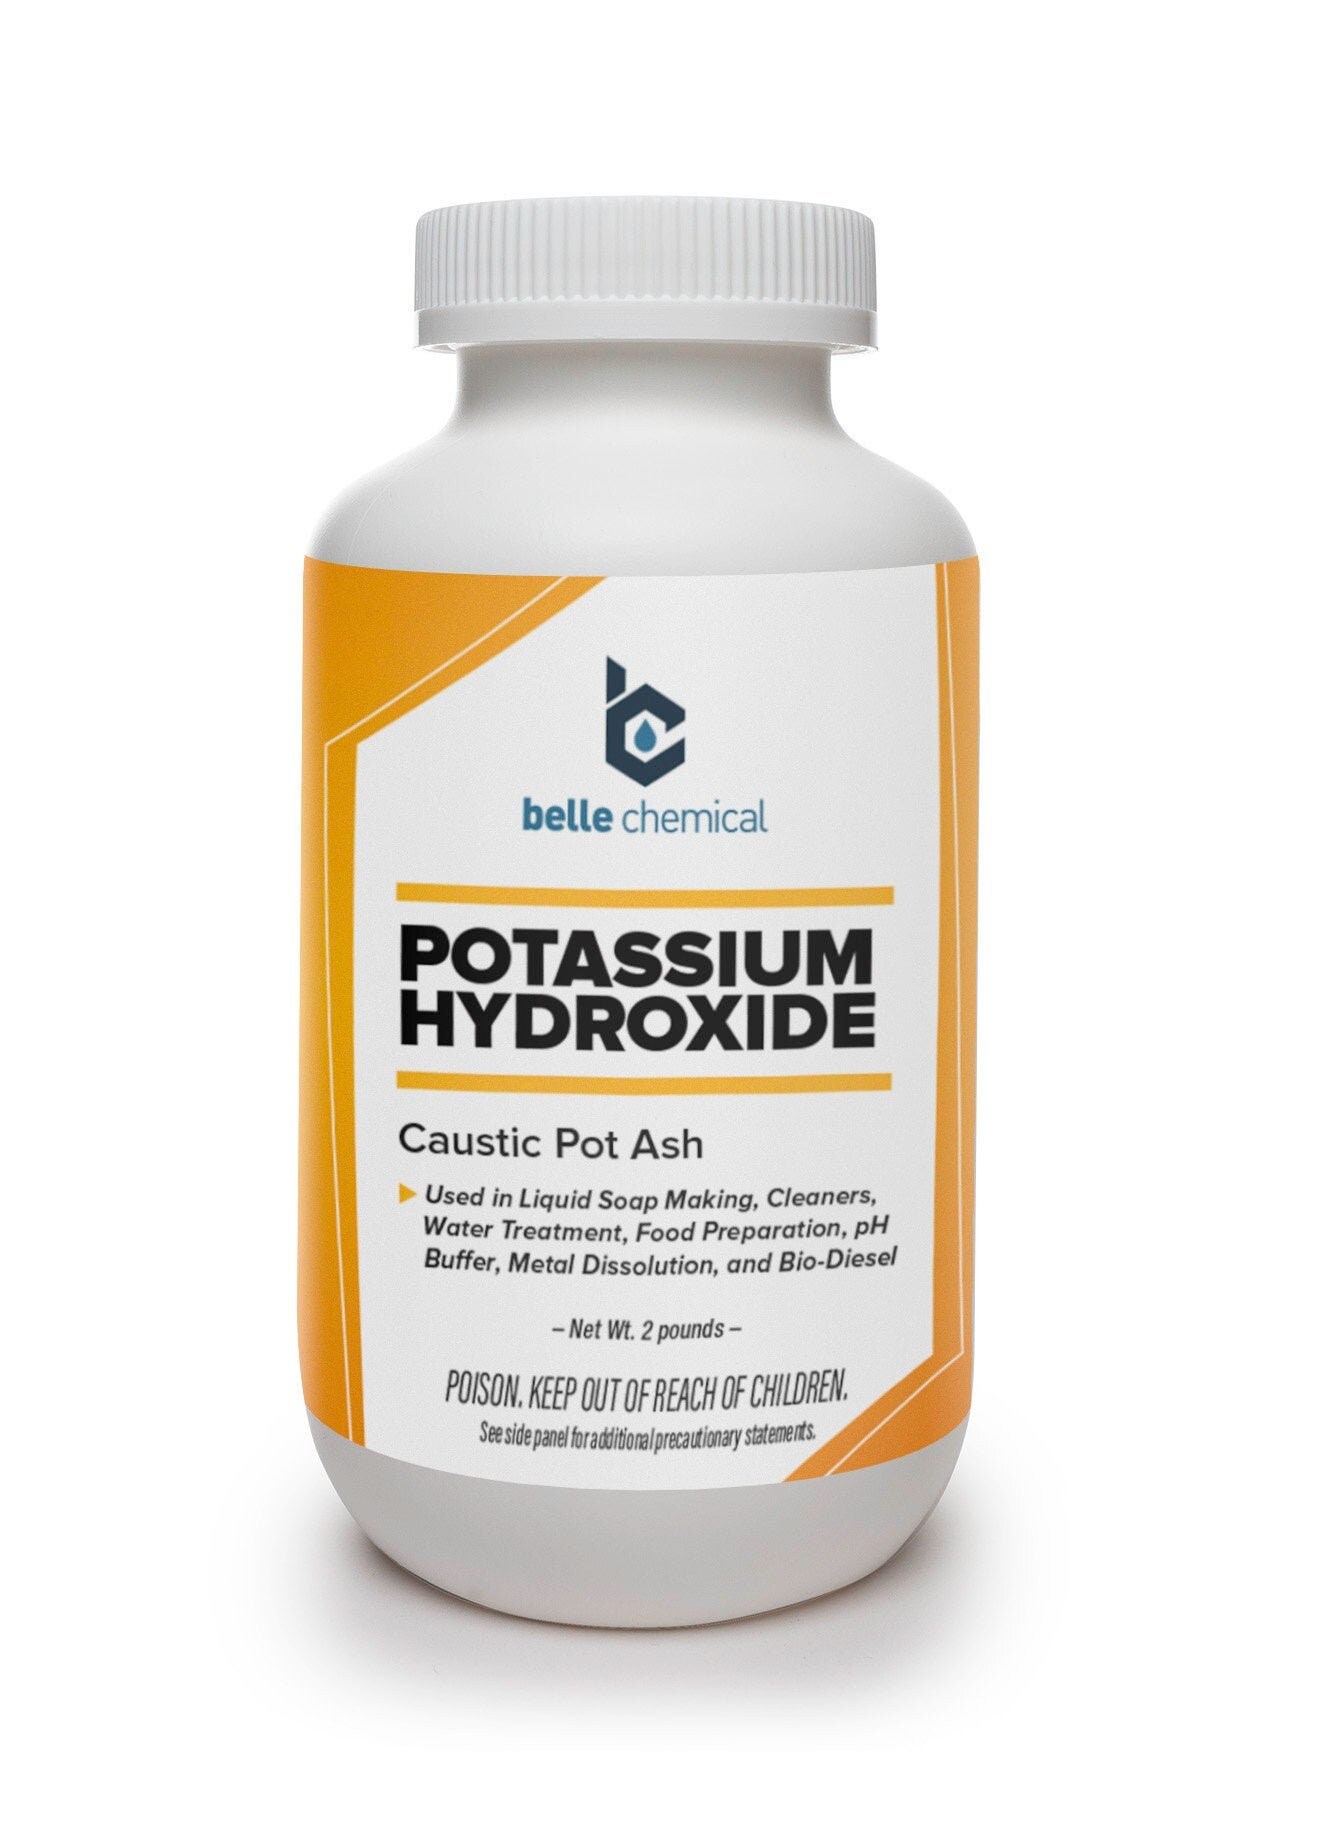 Sodium Hydroxide Caustic Soda 99% Pure Lab Chemical E524 Lye 50g